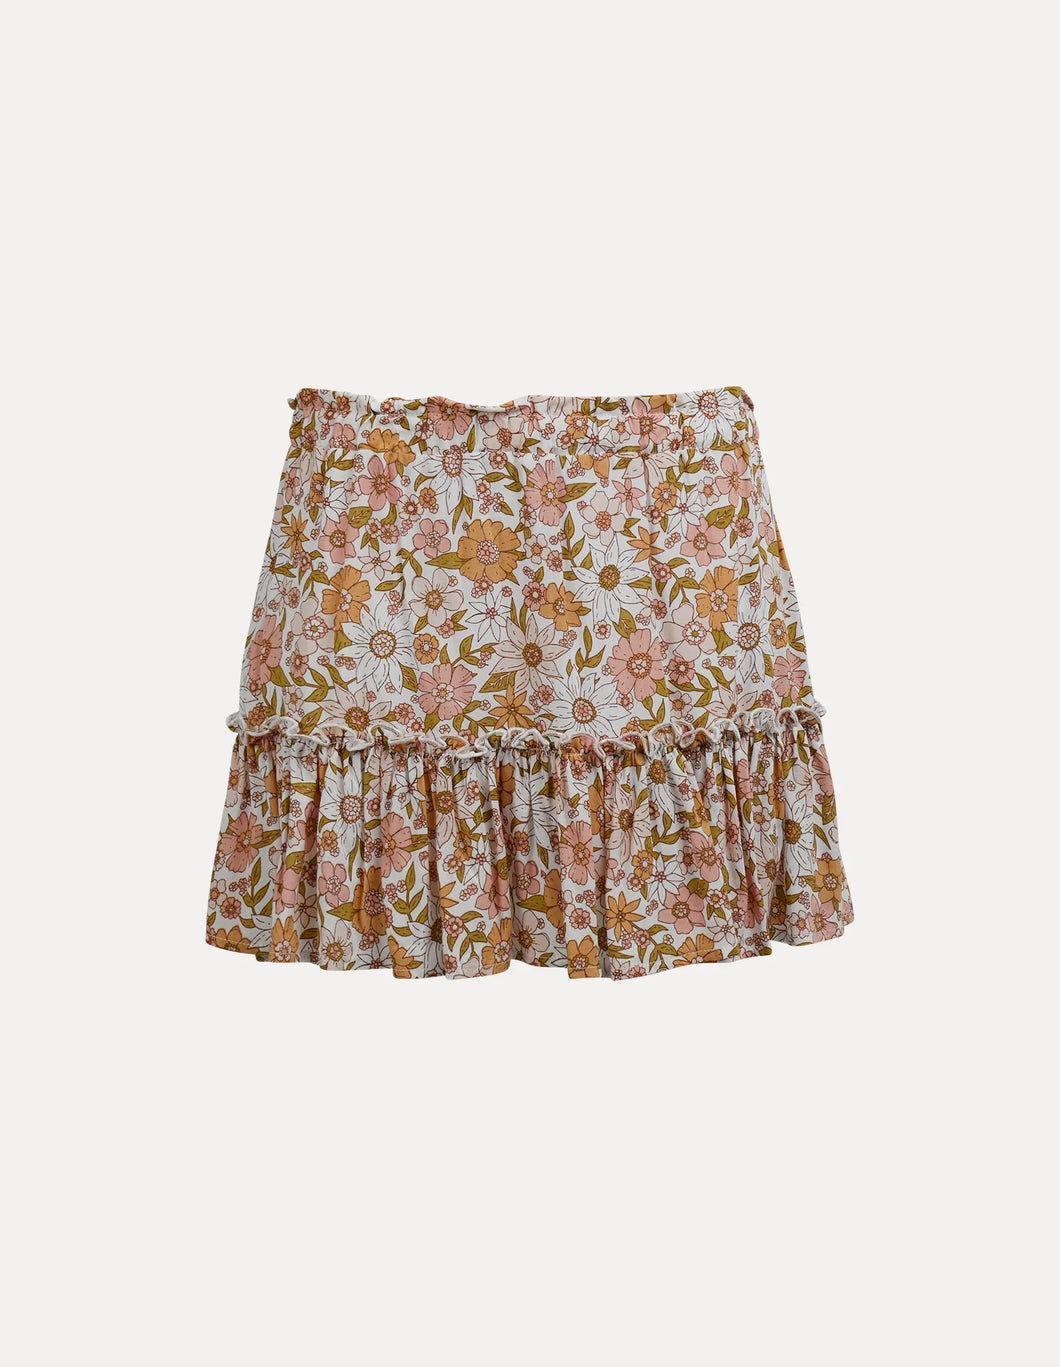 Maisie Floral Skirt - Print